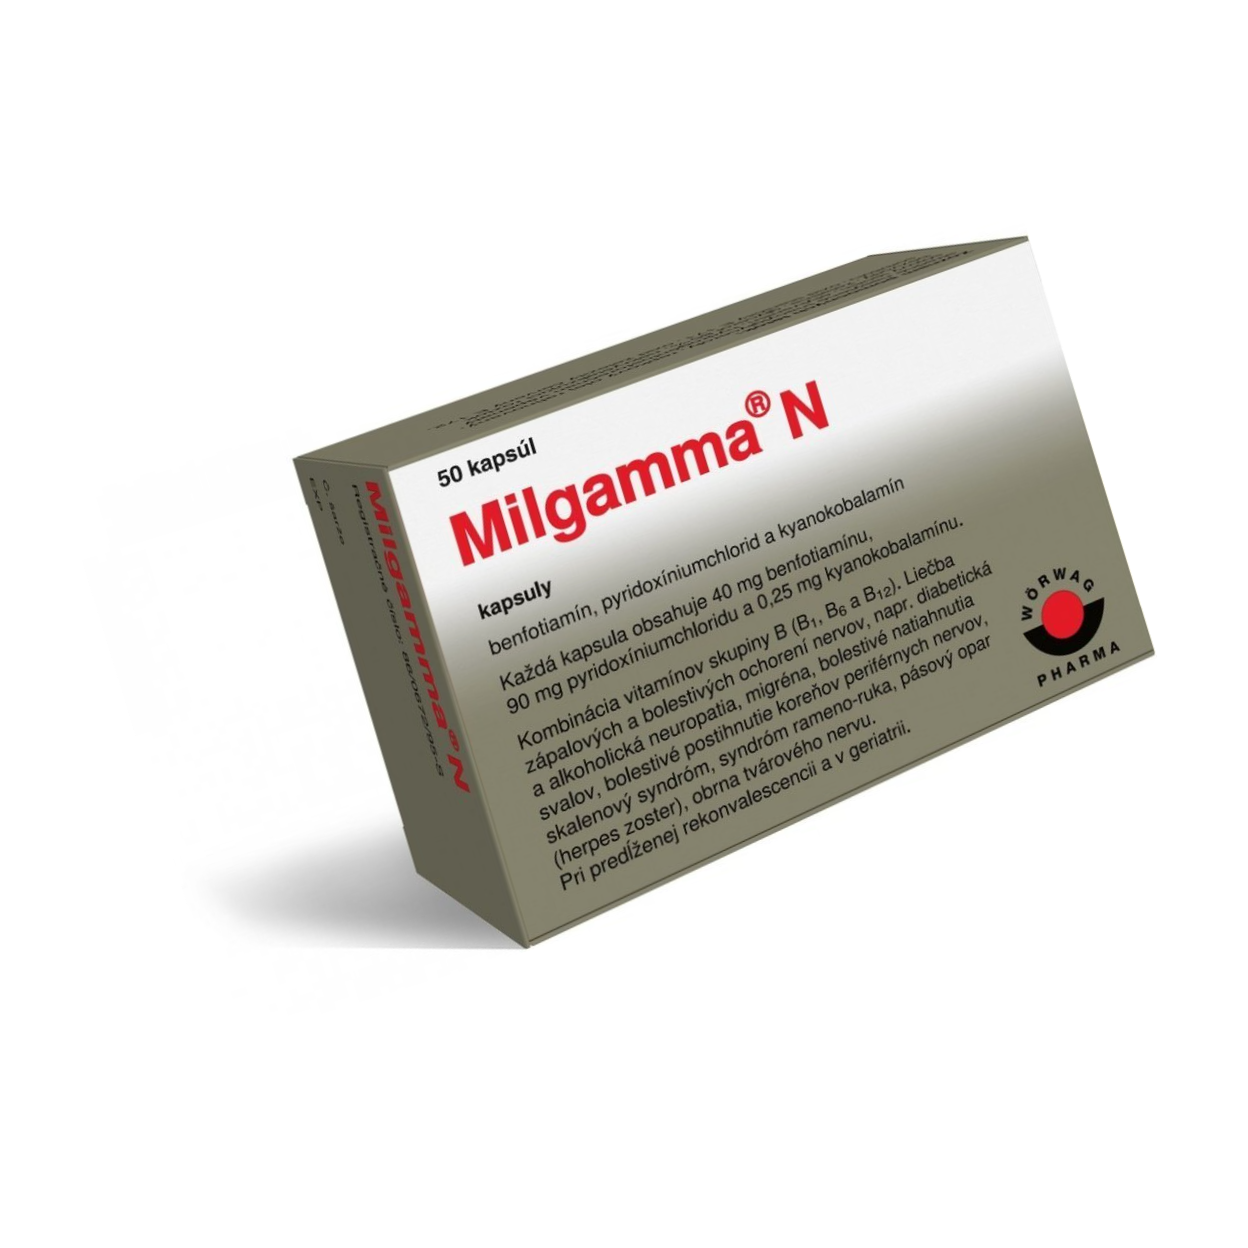 3 pack of milgamma n 50 pcs - vitamins b1, b6, b12 necessary for metabolism